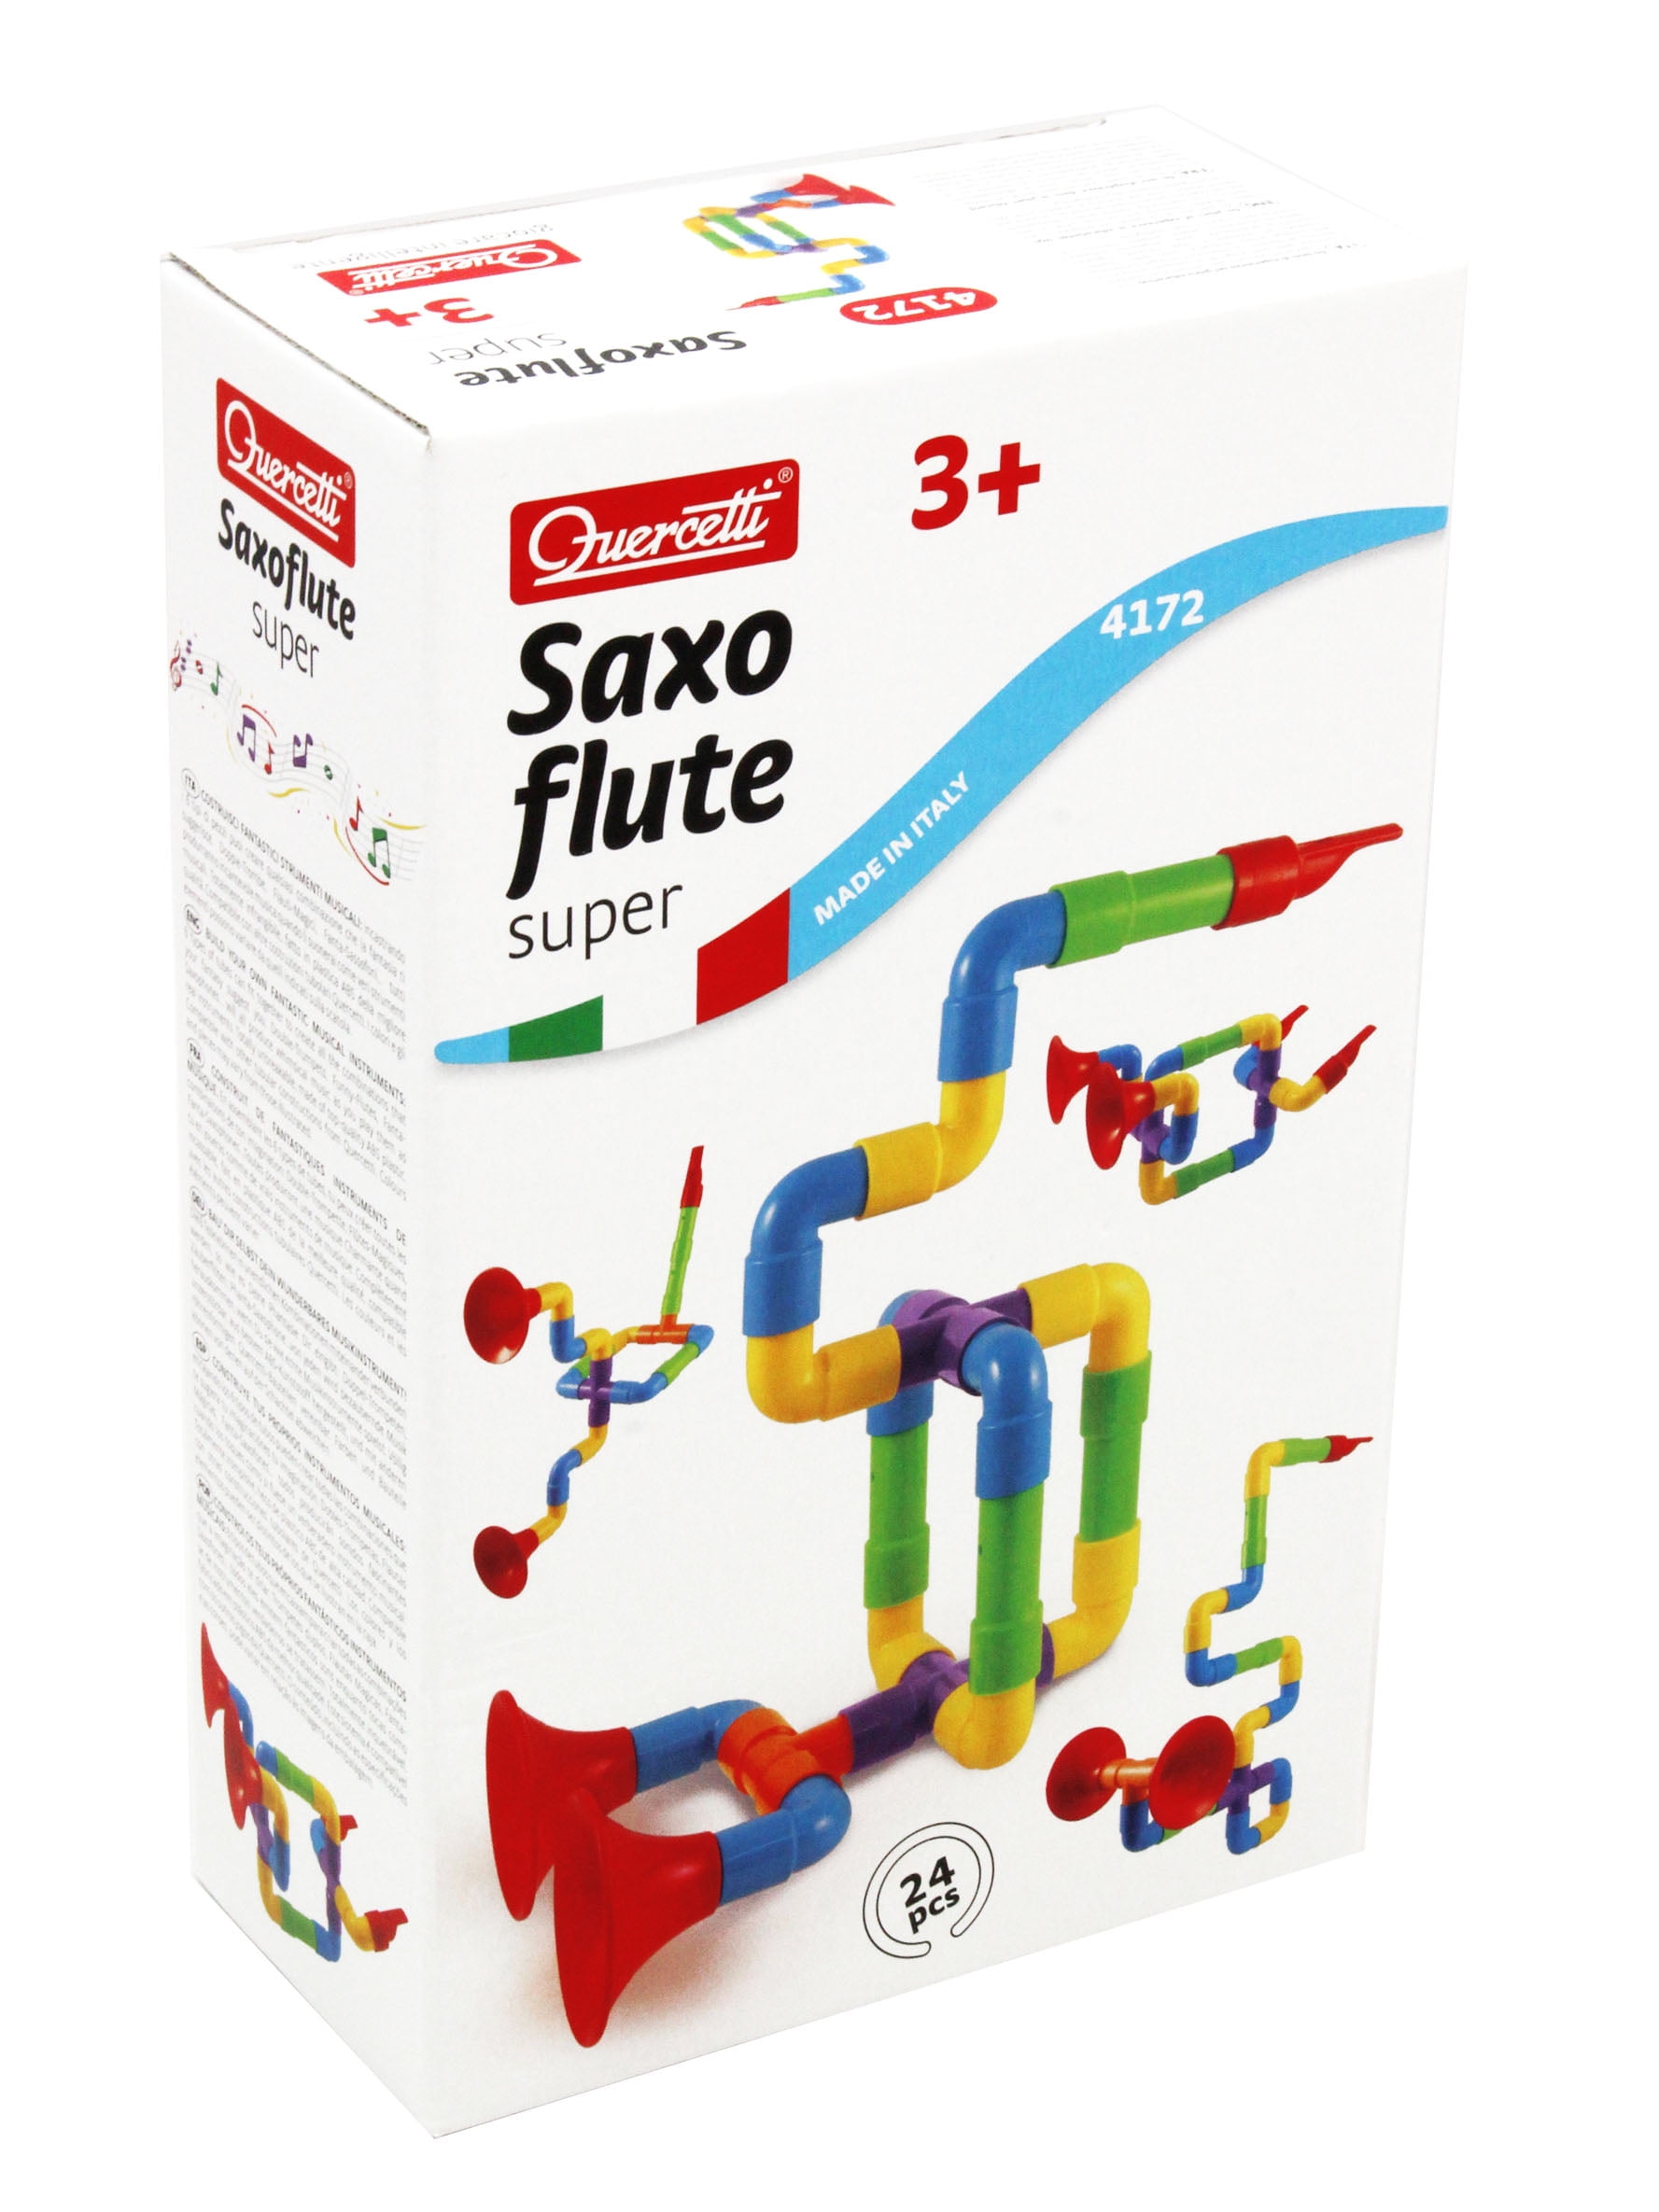 Quercetti Super Saxoflute Customizable Musical Instrument 